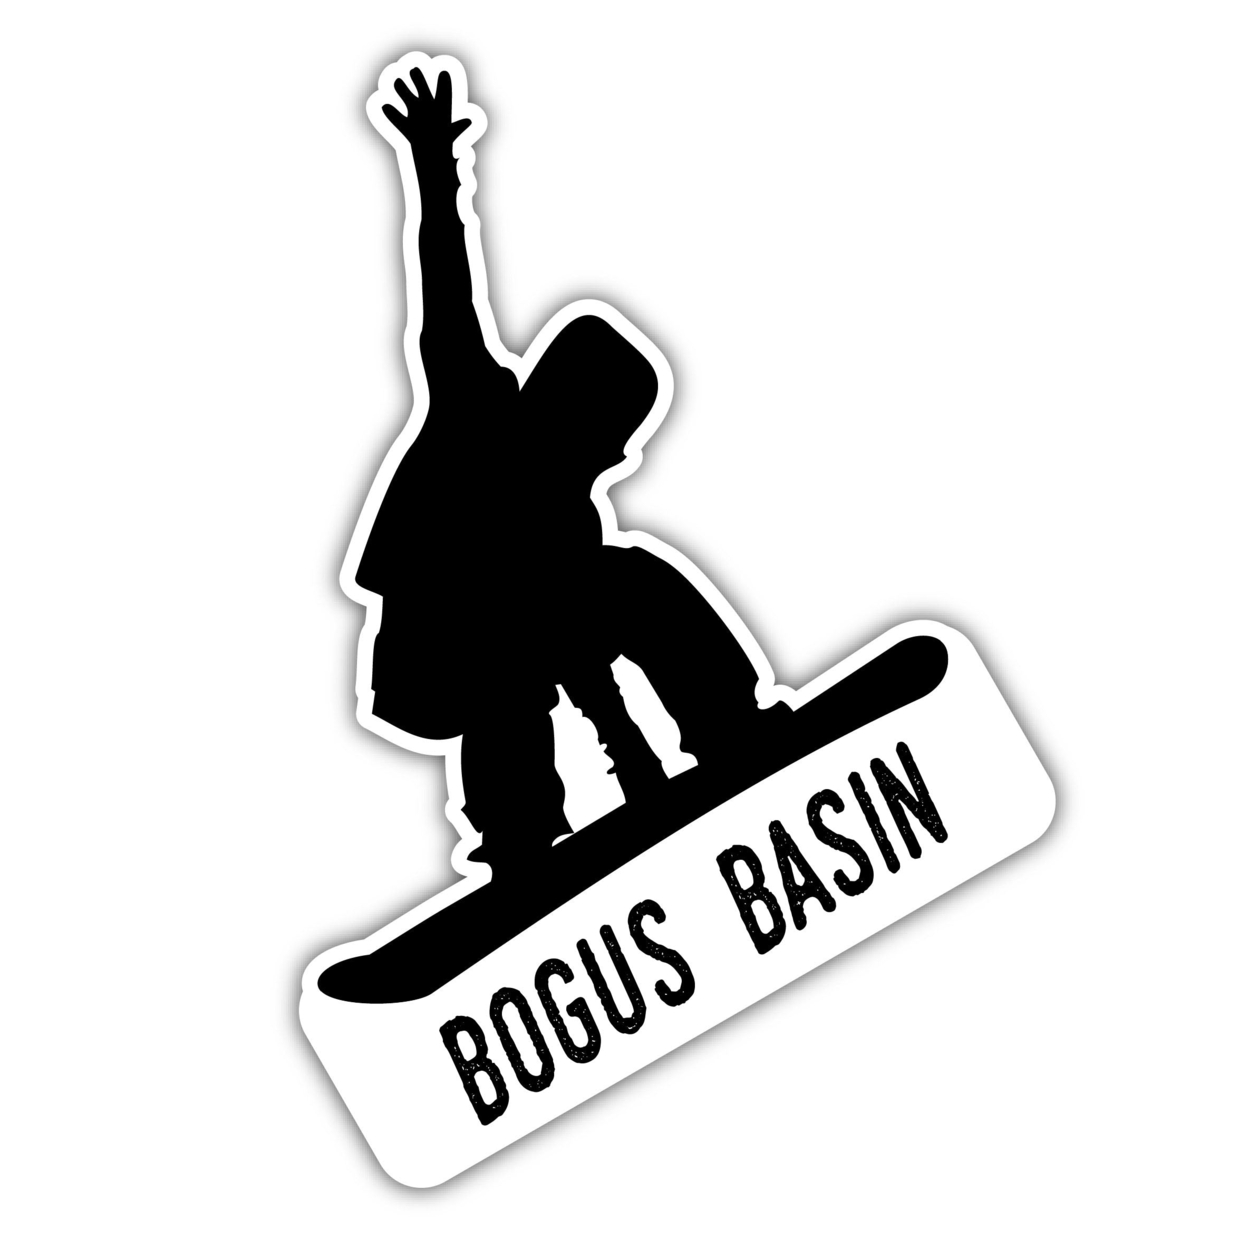 Bogus Basin Idaho Ski Adventures Souvenir 4 Inch Vinyl Decal Sticker Board Design